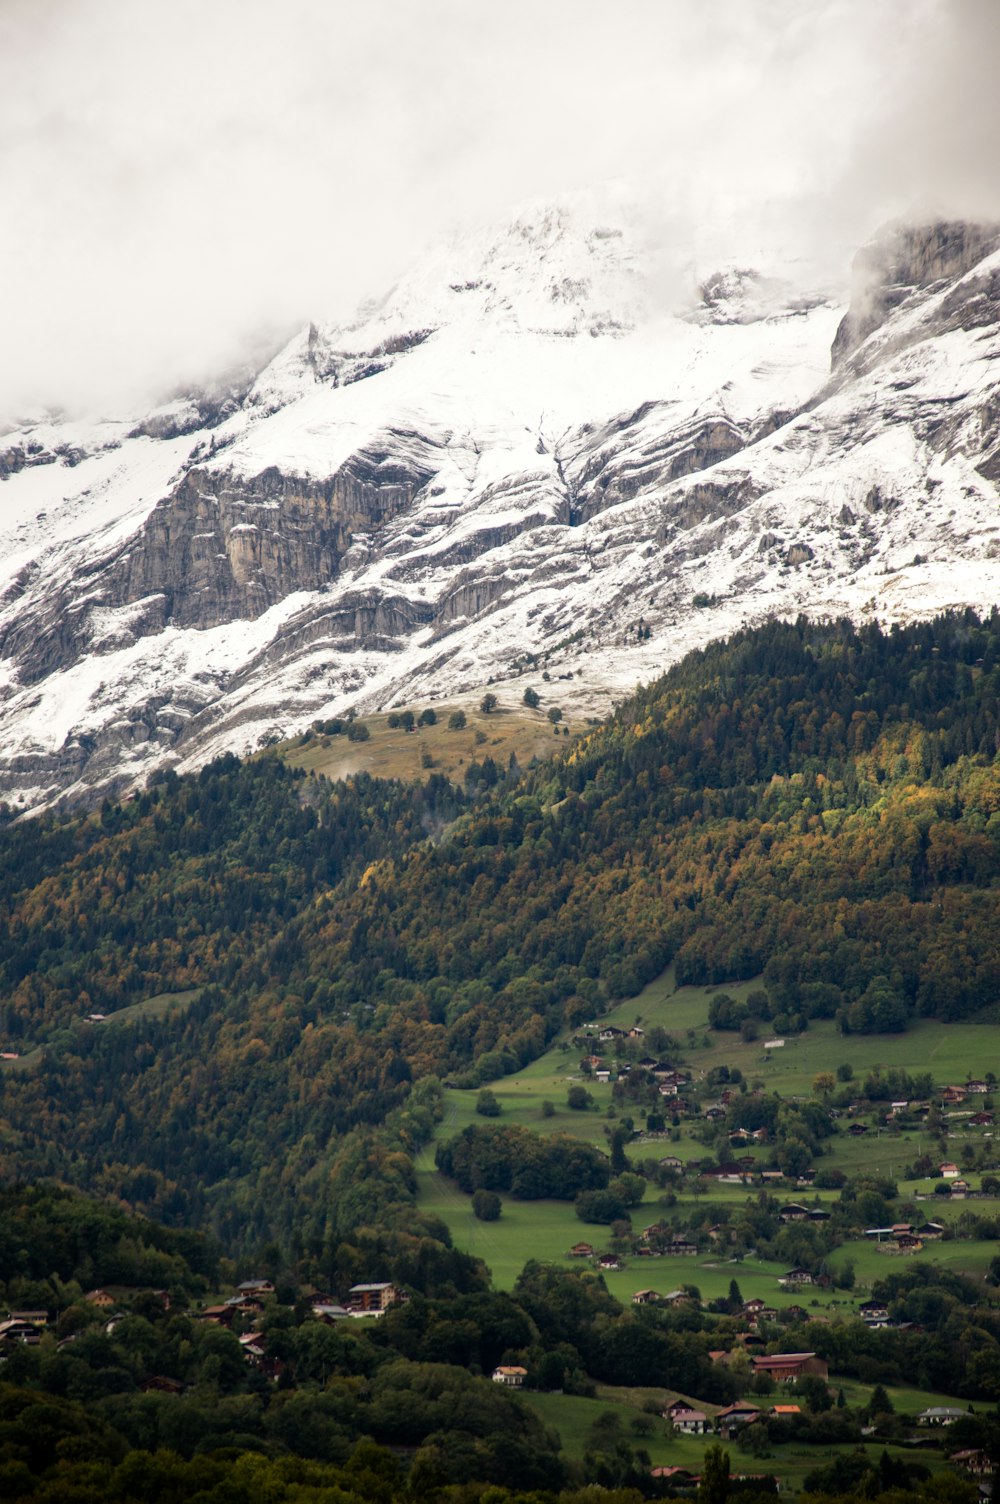 a snowy mountain with a village below it